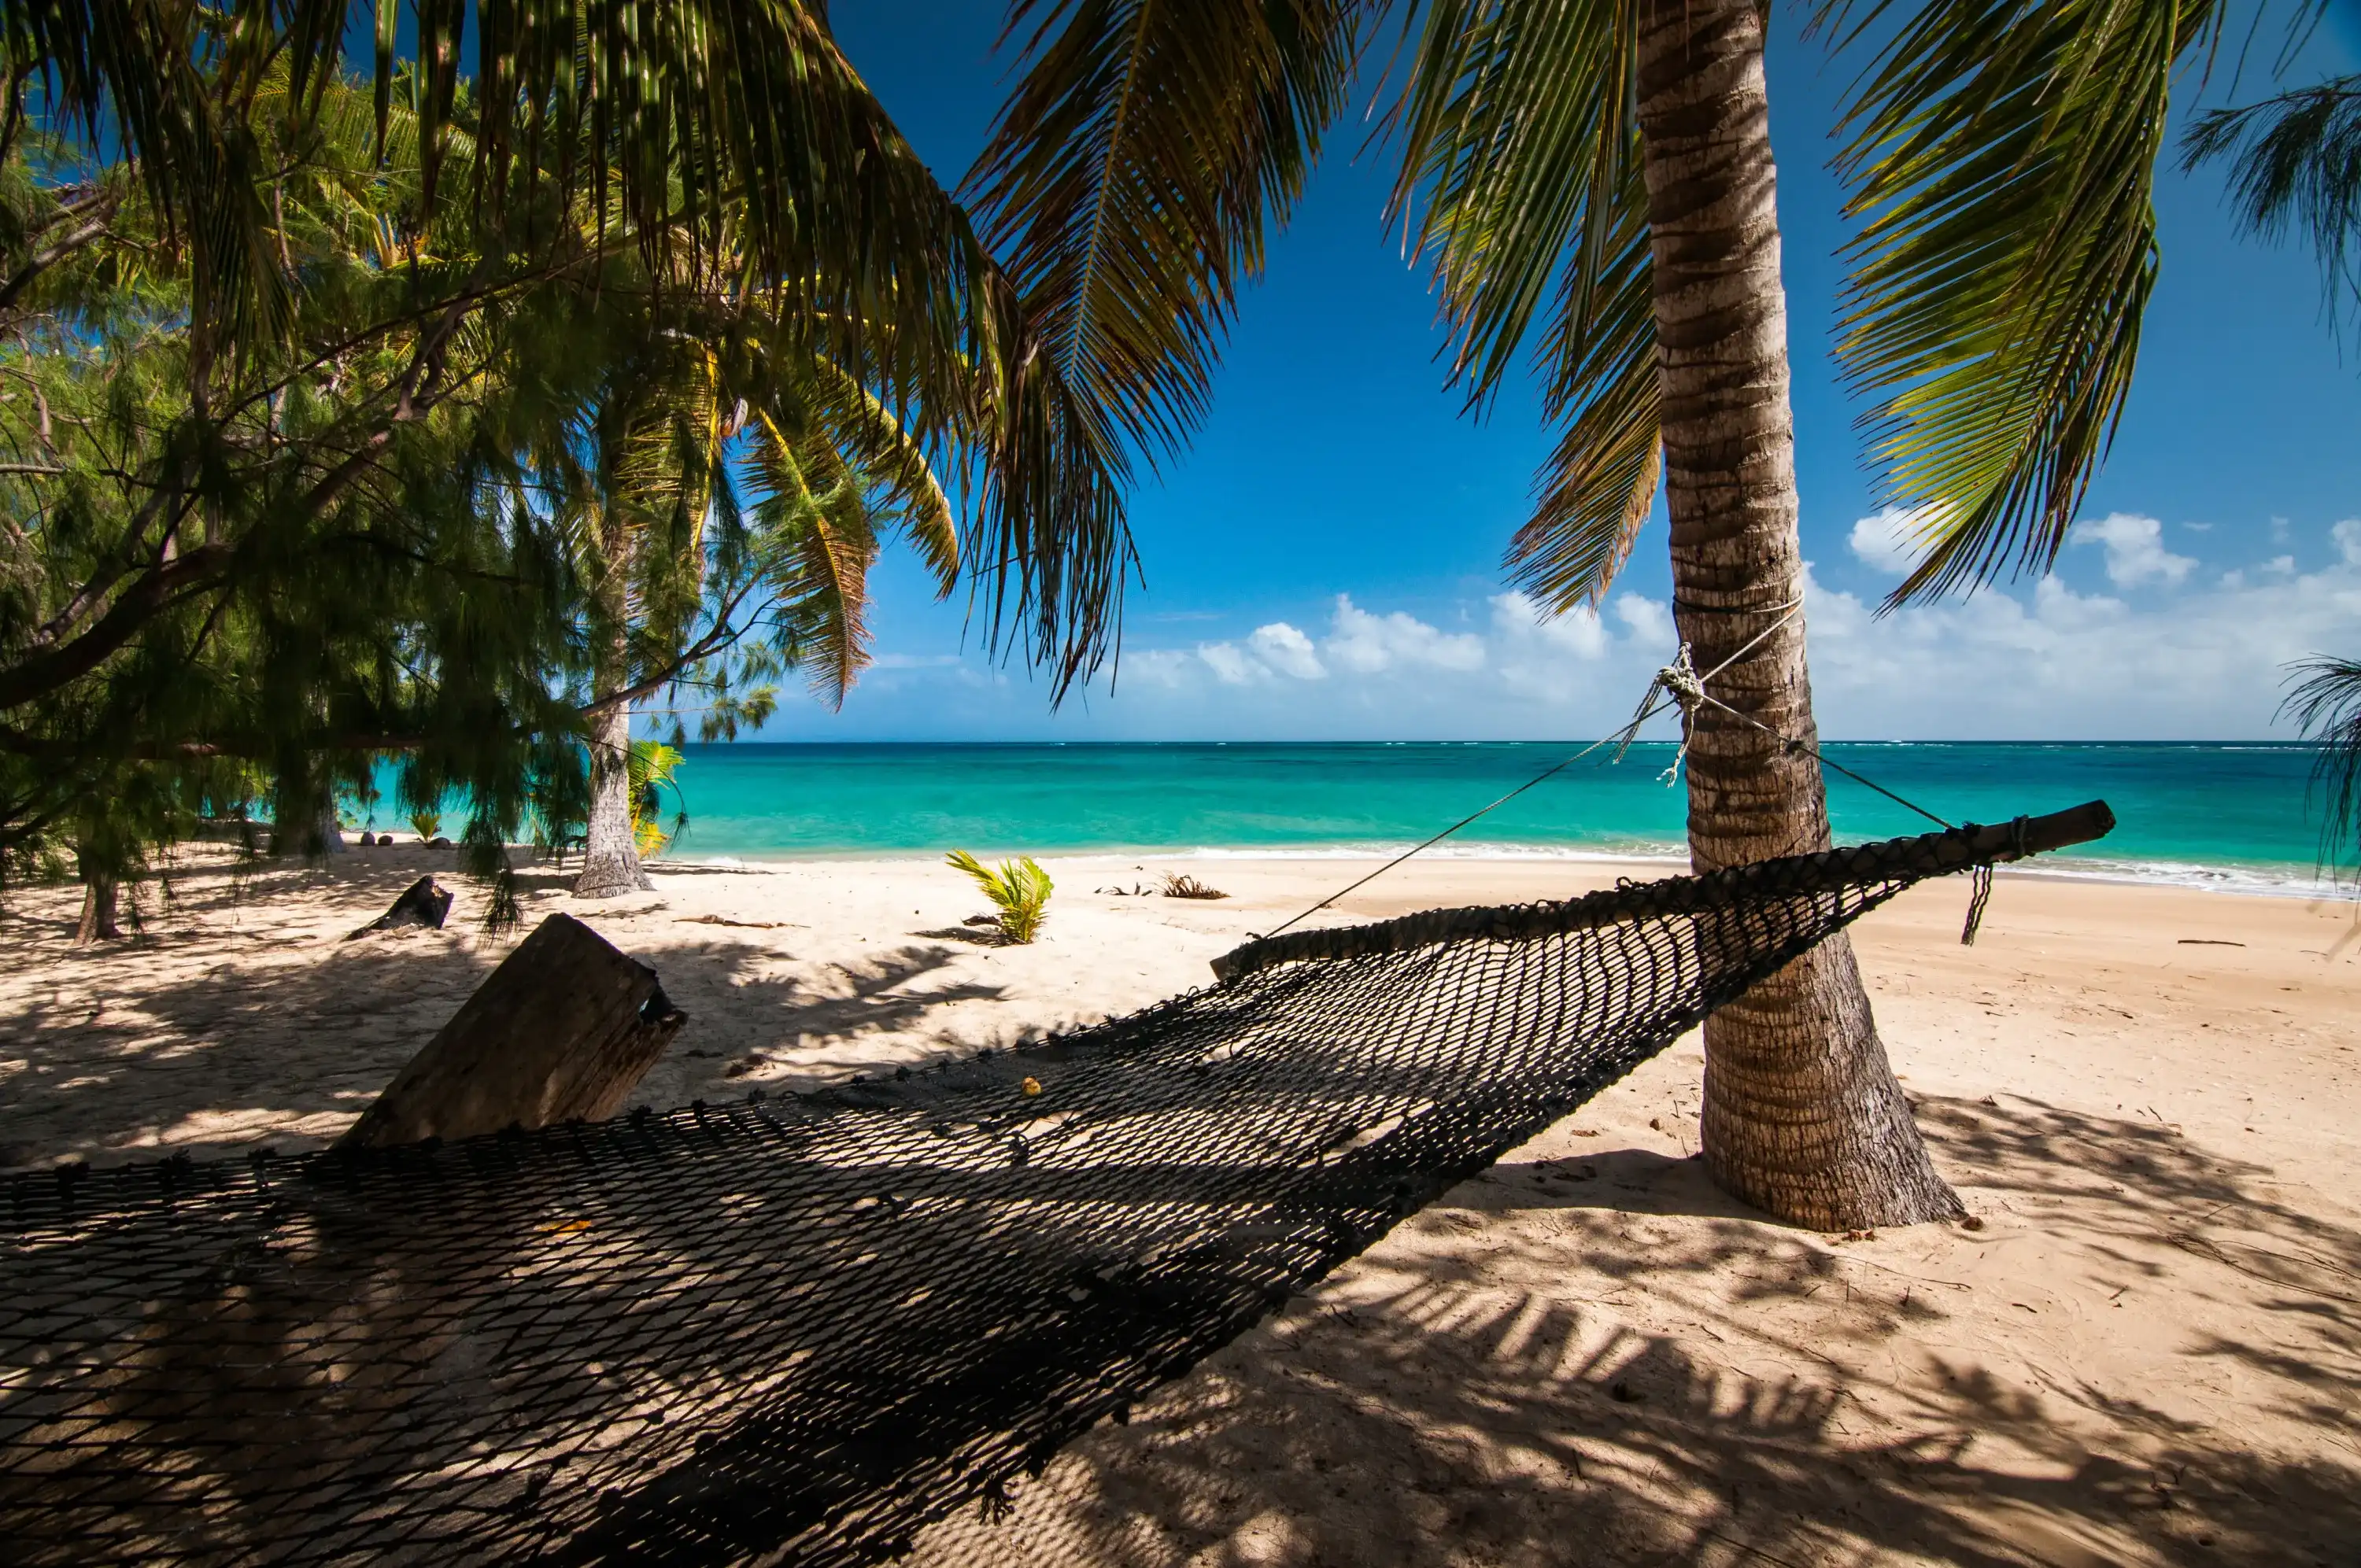 Hammock on Tropical beach paradise on Uoleva island, Kingdom of Tonga in South Pacific